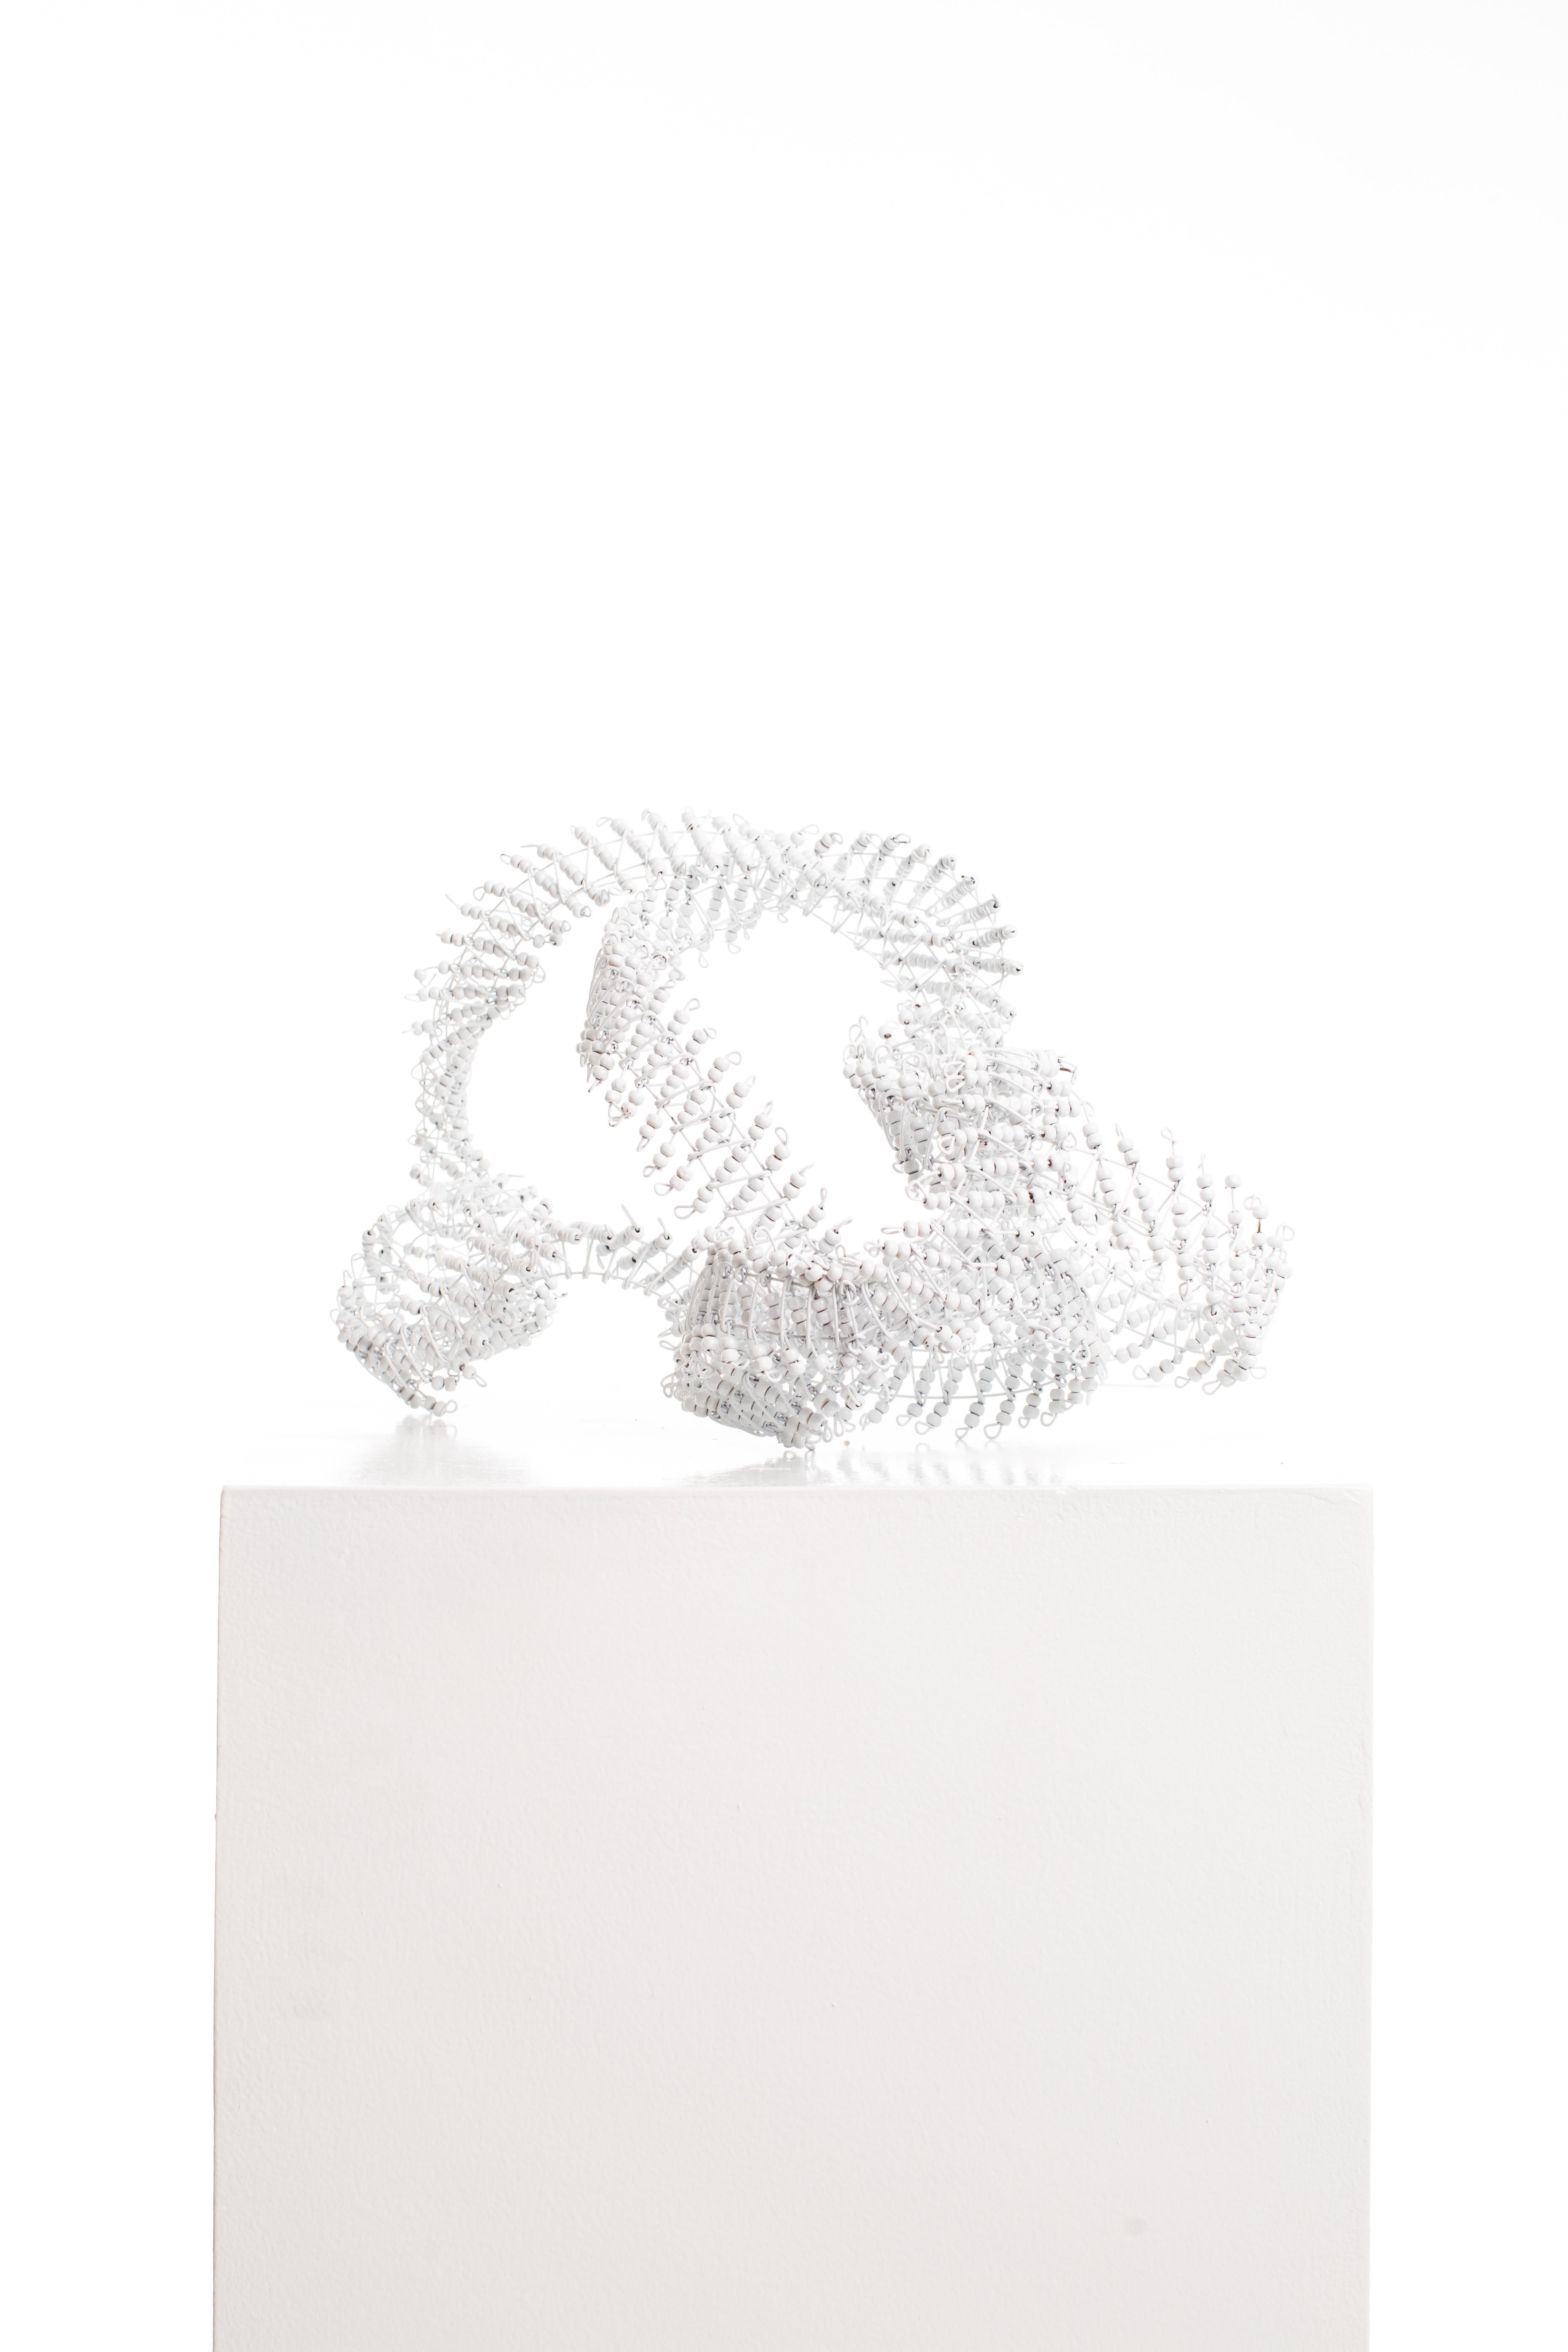 White, Beaded, Steel, Pattern, Abstract, Contemporary, Modern, Art - Sculpture by Driaan Claassen